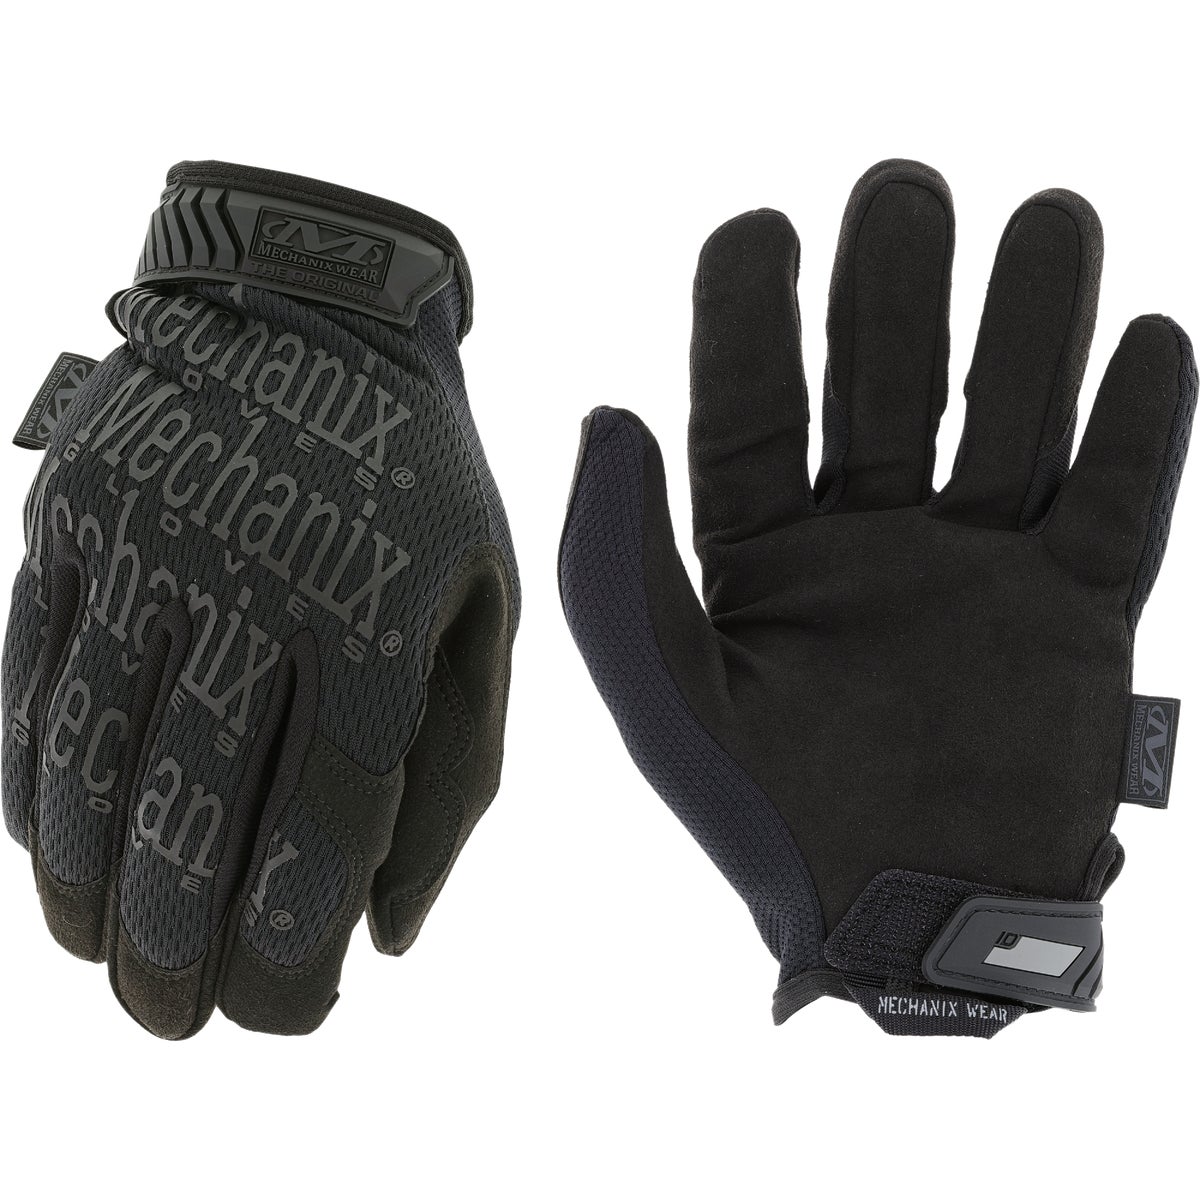 MG-55-011 Mechanix Wear Original Mens Work Glove